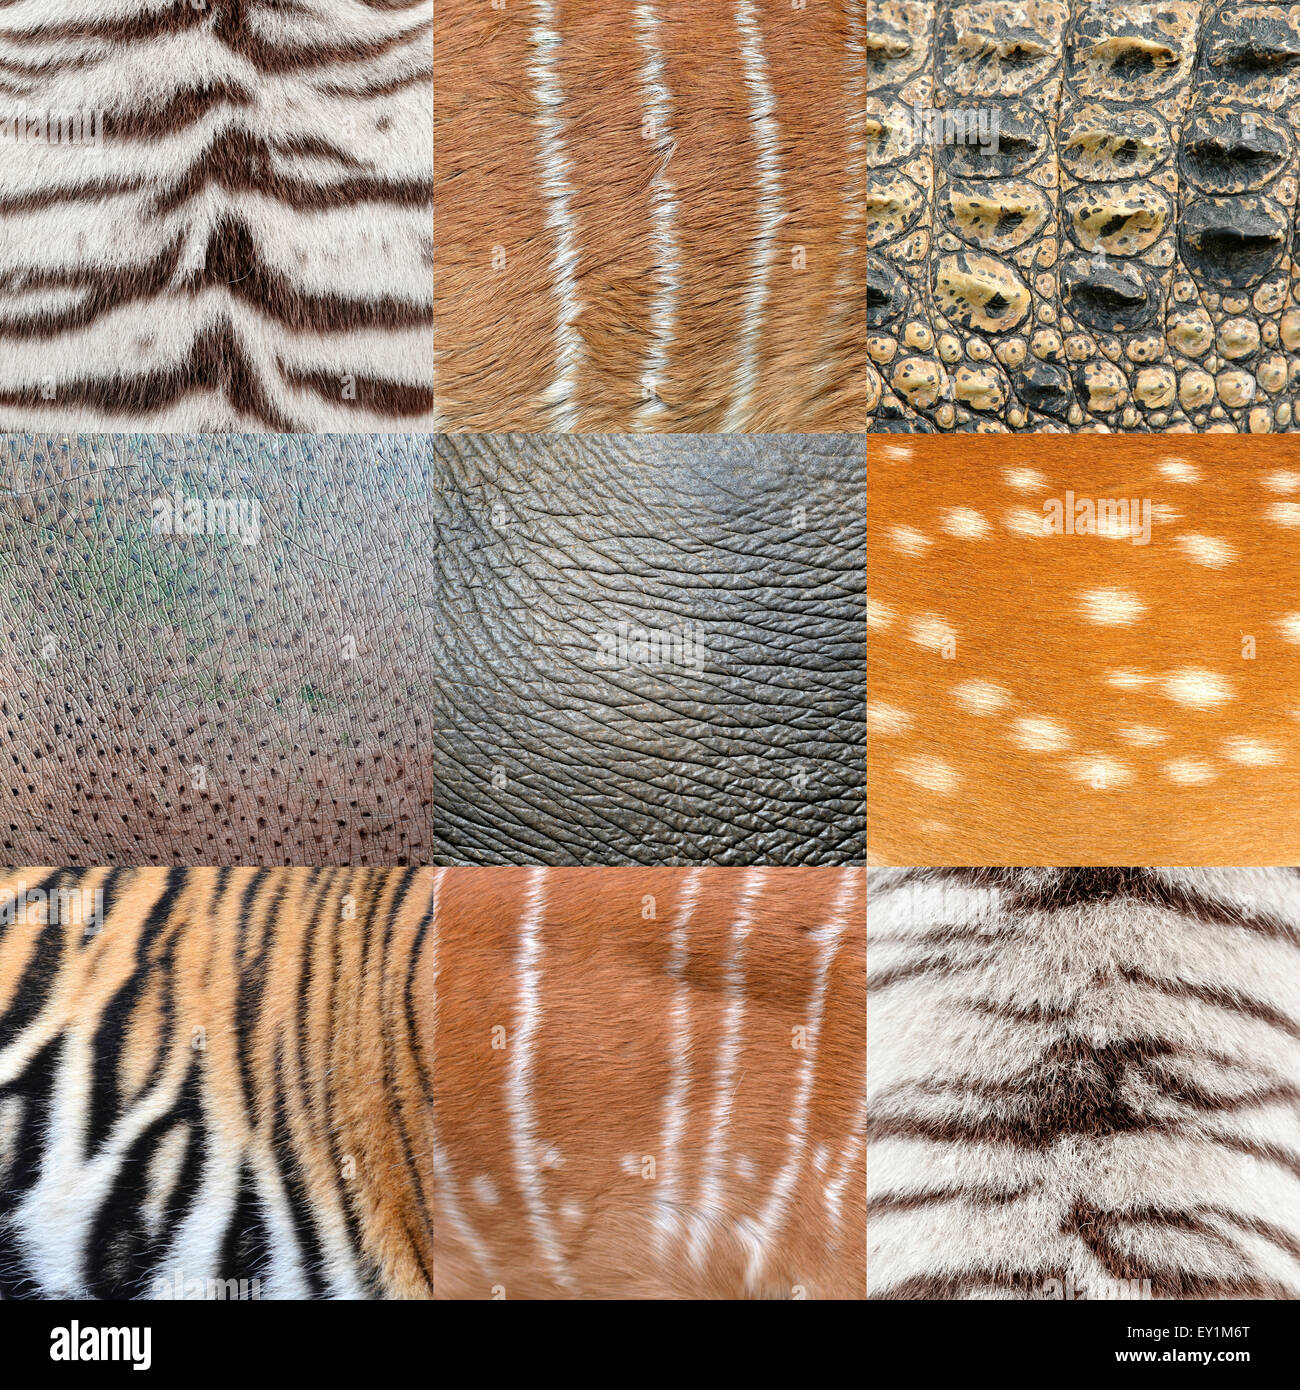 textured of an animals skin Stock Photo: 85475008 - Alamy